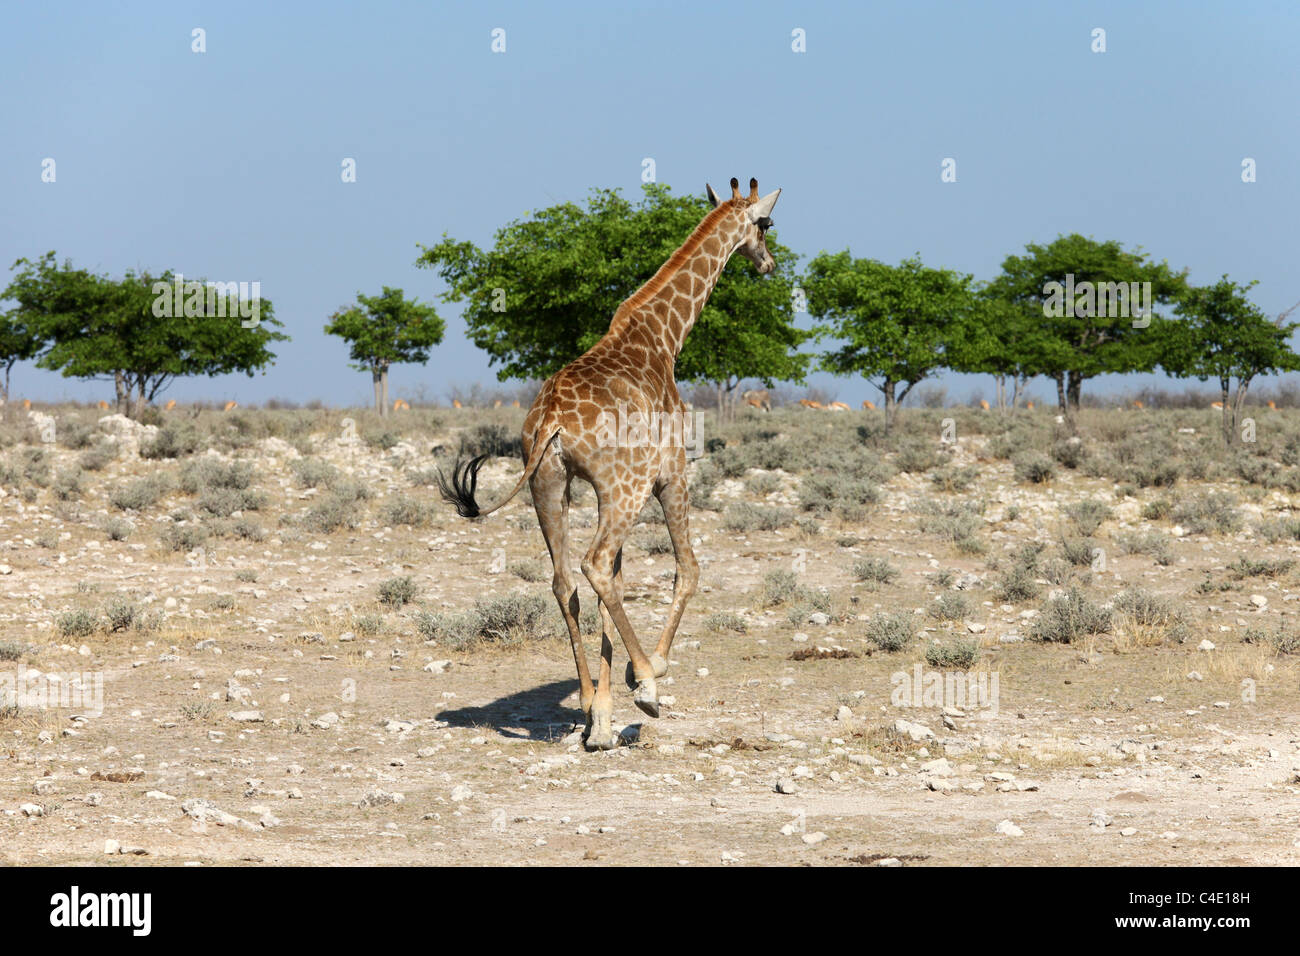 Angolan giraffe( Giraffa camelopardalis angolensis) running in Etosha National Park, Namibia. Stock Photo